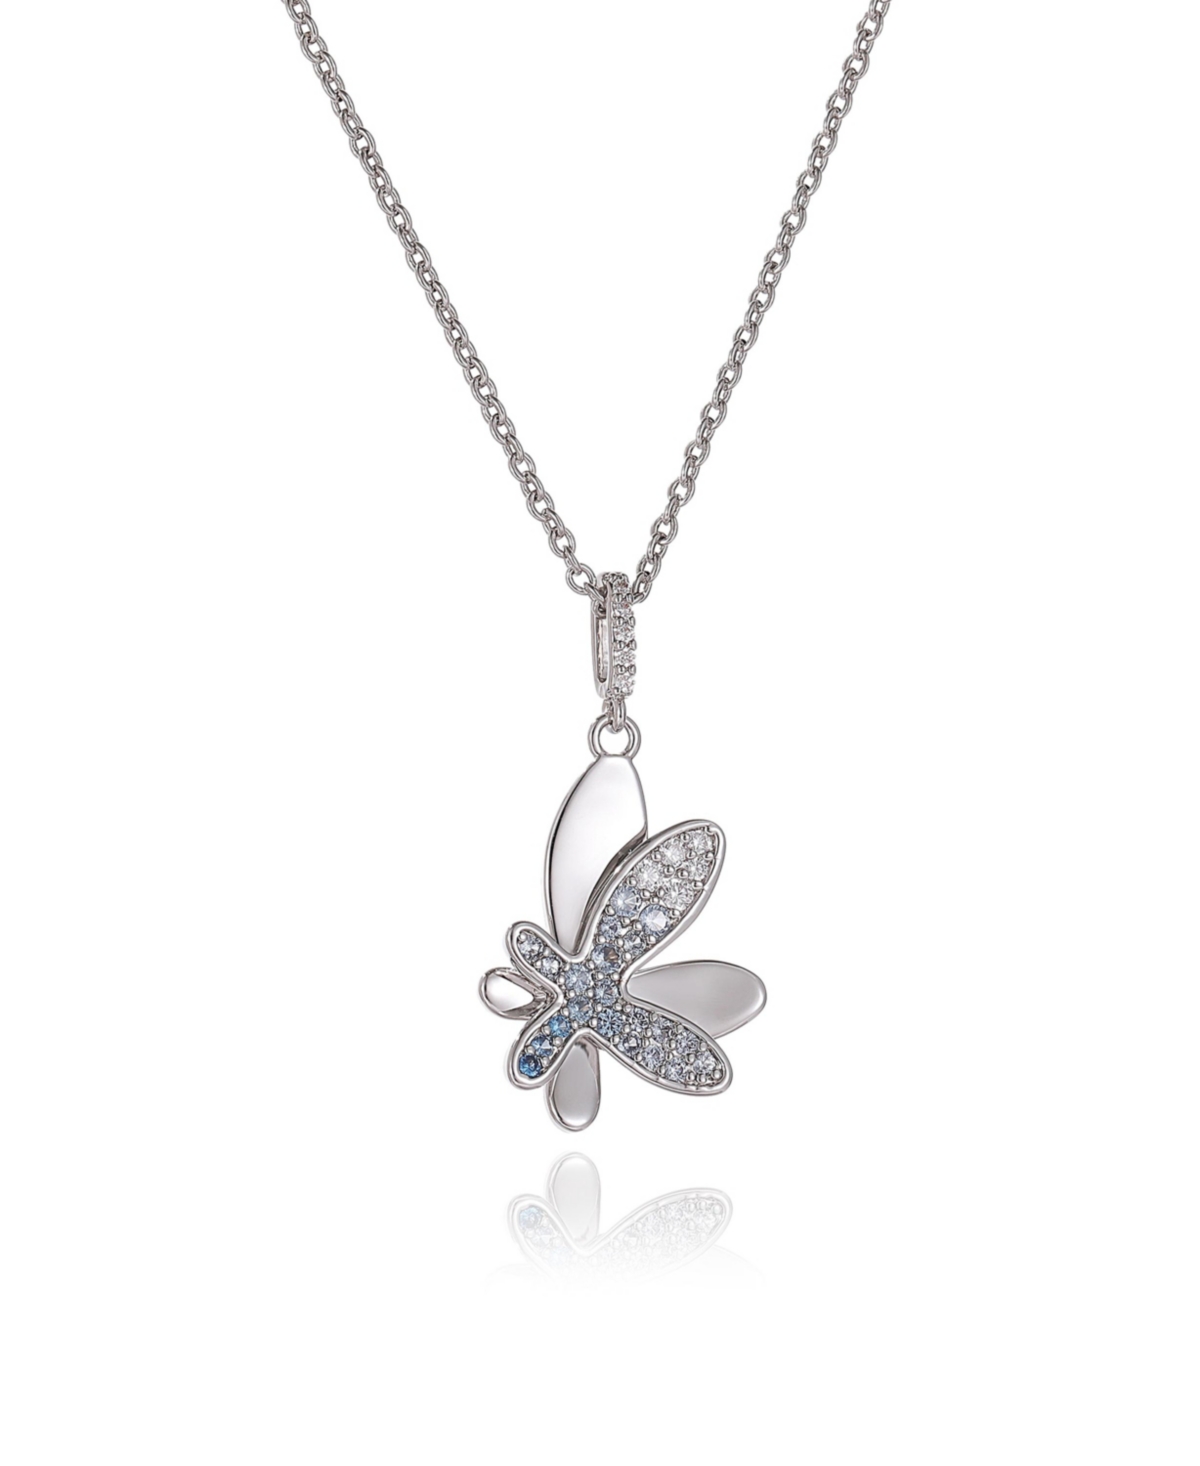 Pave Butterfly Pendant Necklace - Silver